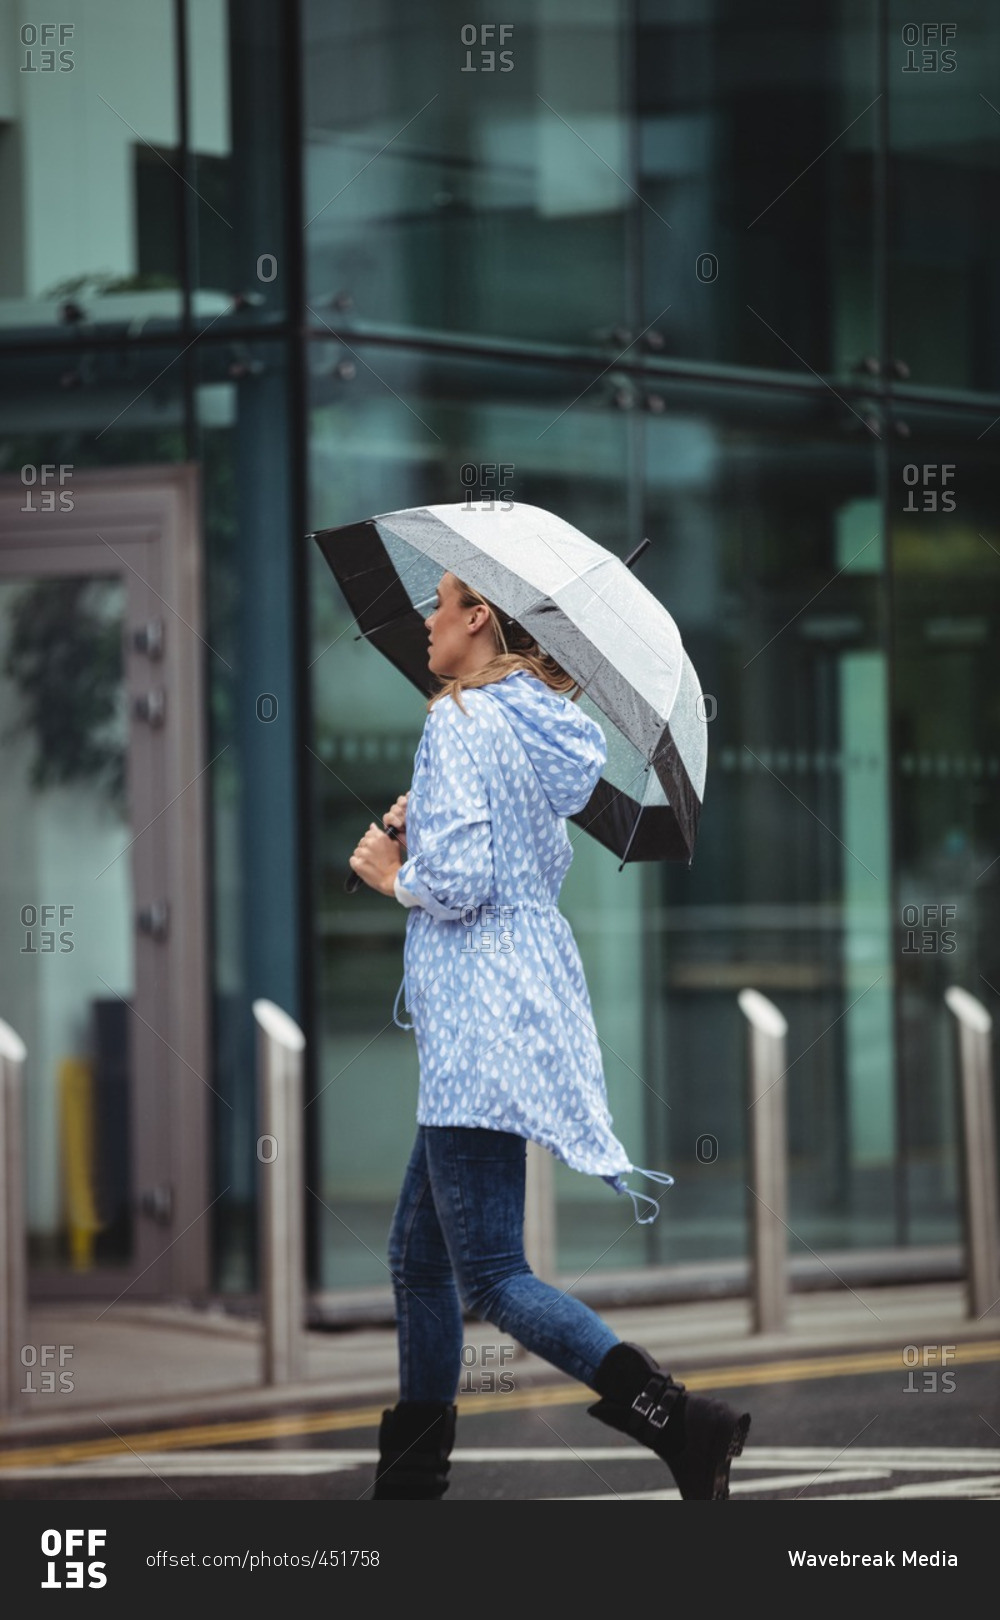 Beautiful woman holding umbrella and walking on street during rainy season